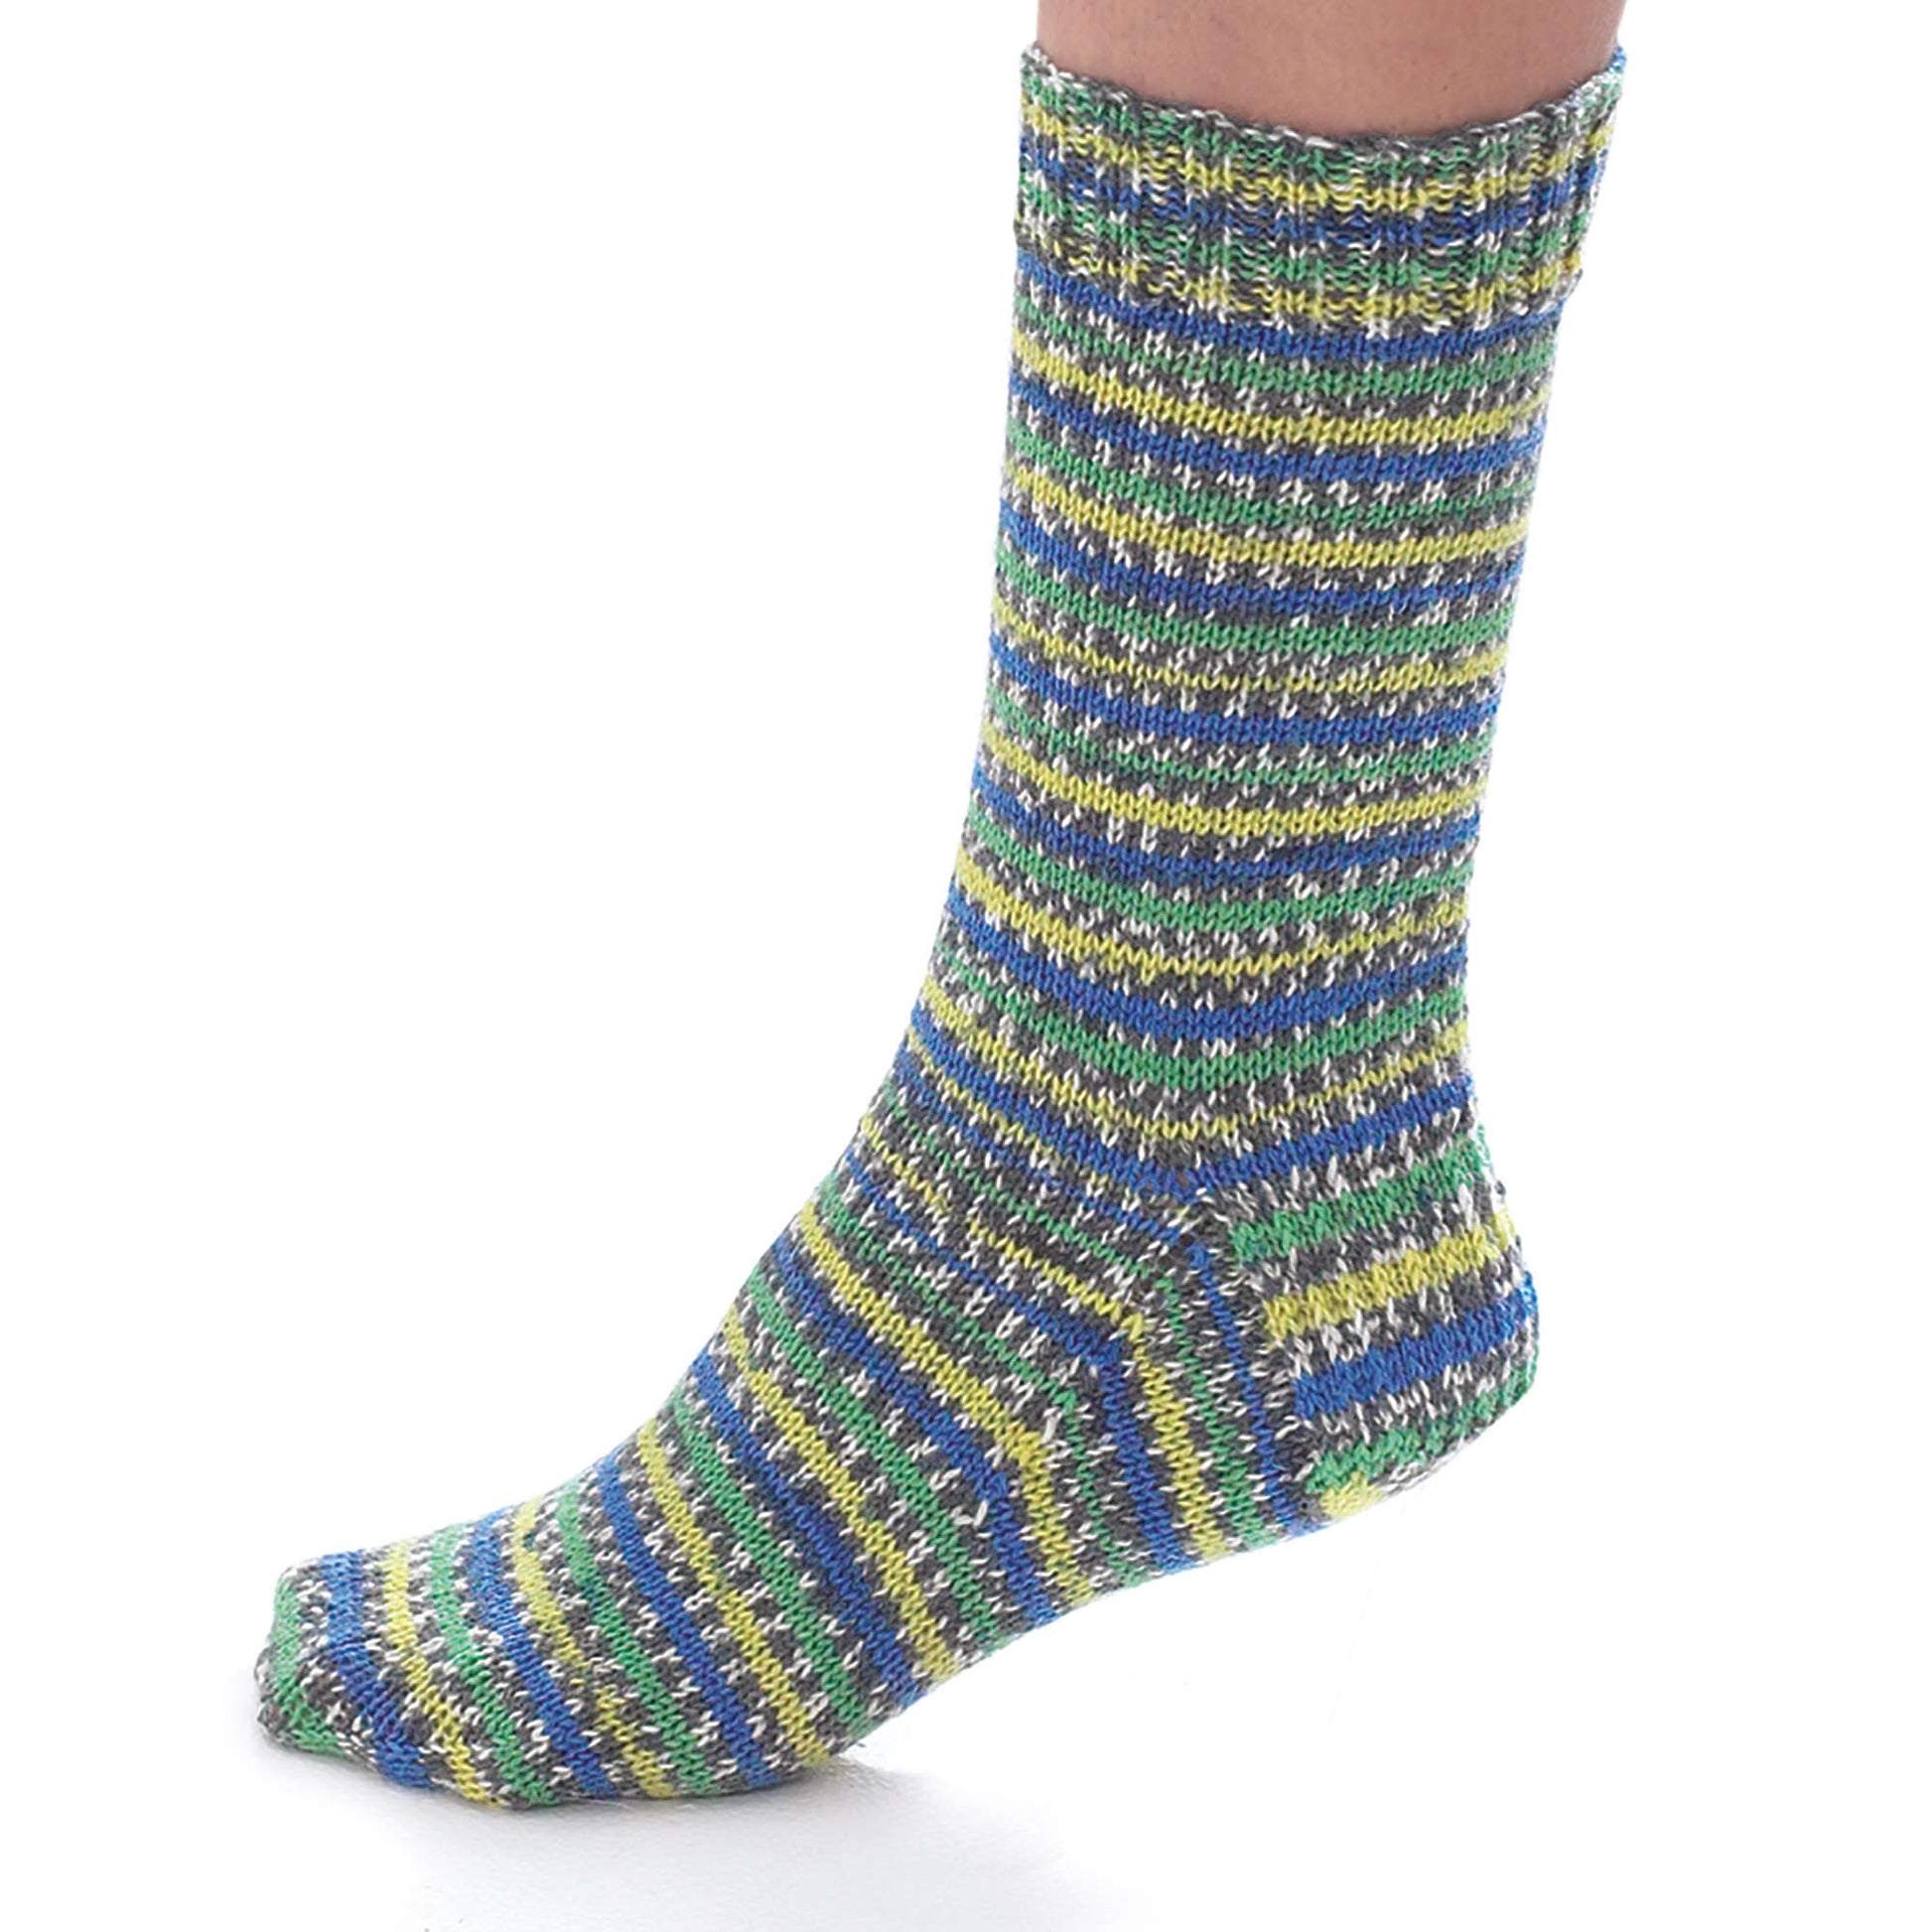 Free Patons Jacquard & Stripe Socks Knit Pattern